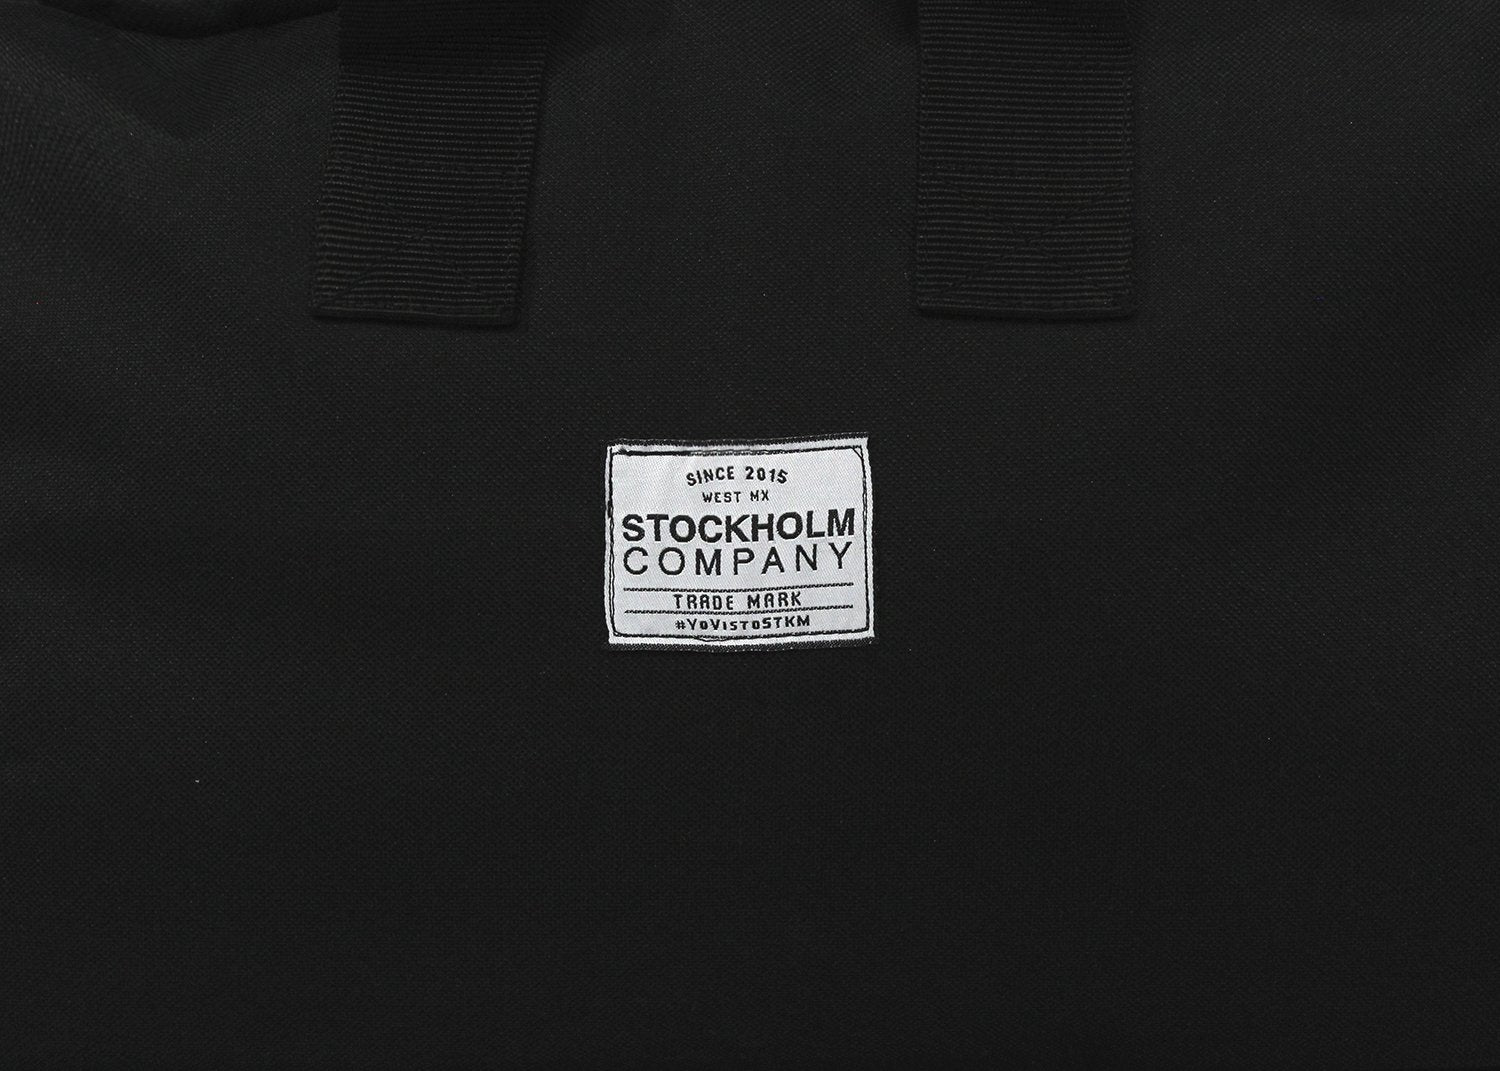 Trip sport bag Maleta mochila (3 colores diferentes) - Stockholm Co. - Mochila - accesorios